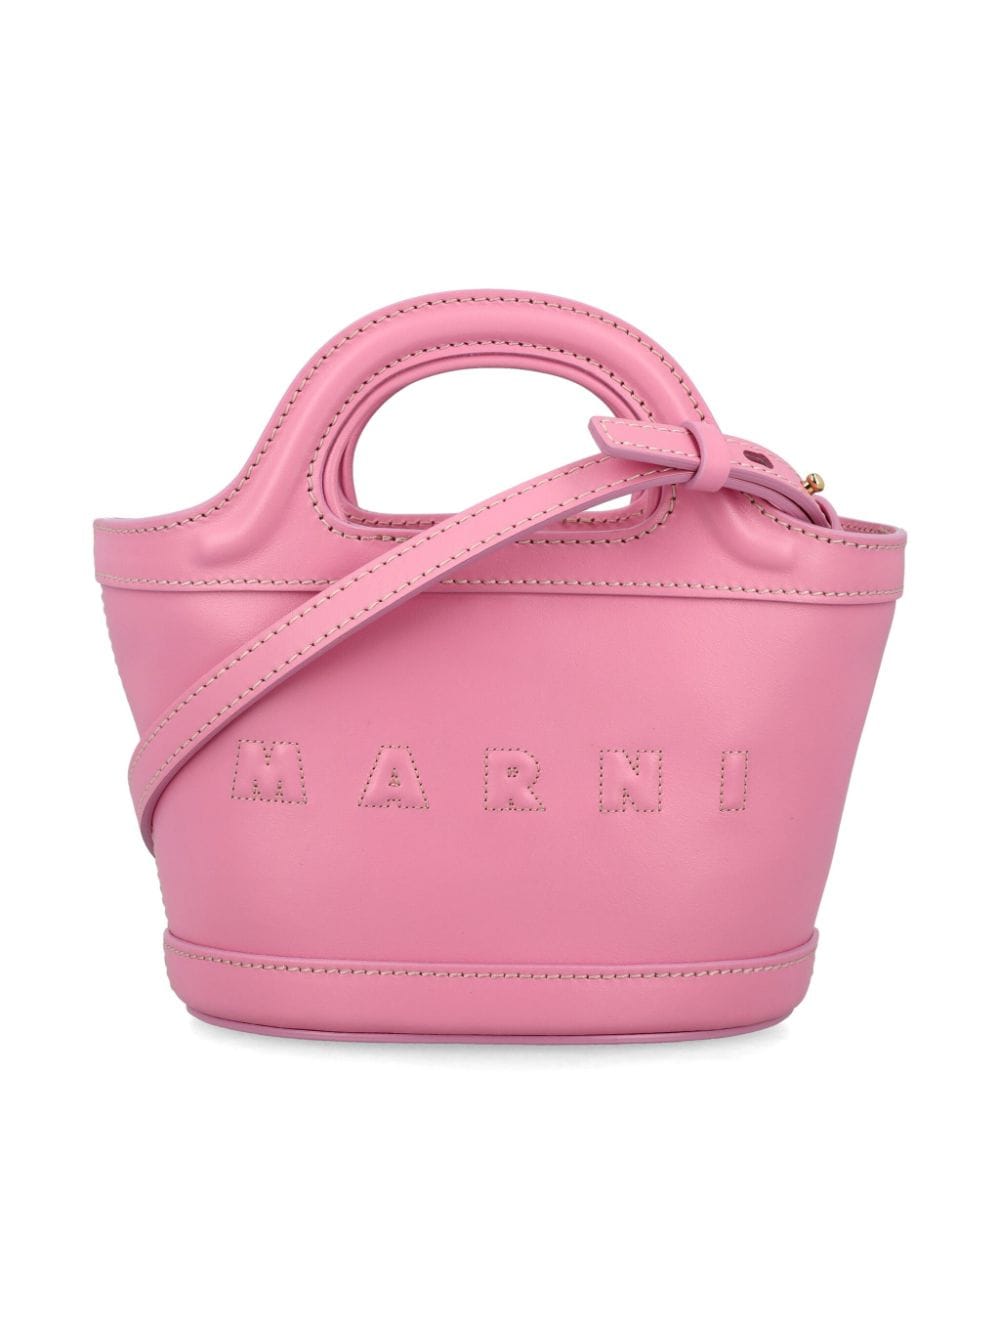 Marni Kids logo-embossed leather bag - Pink